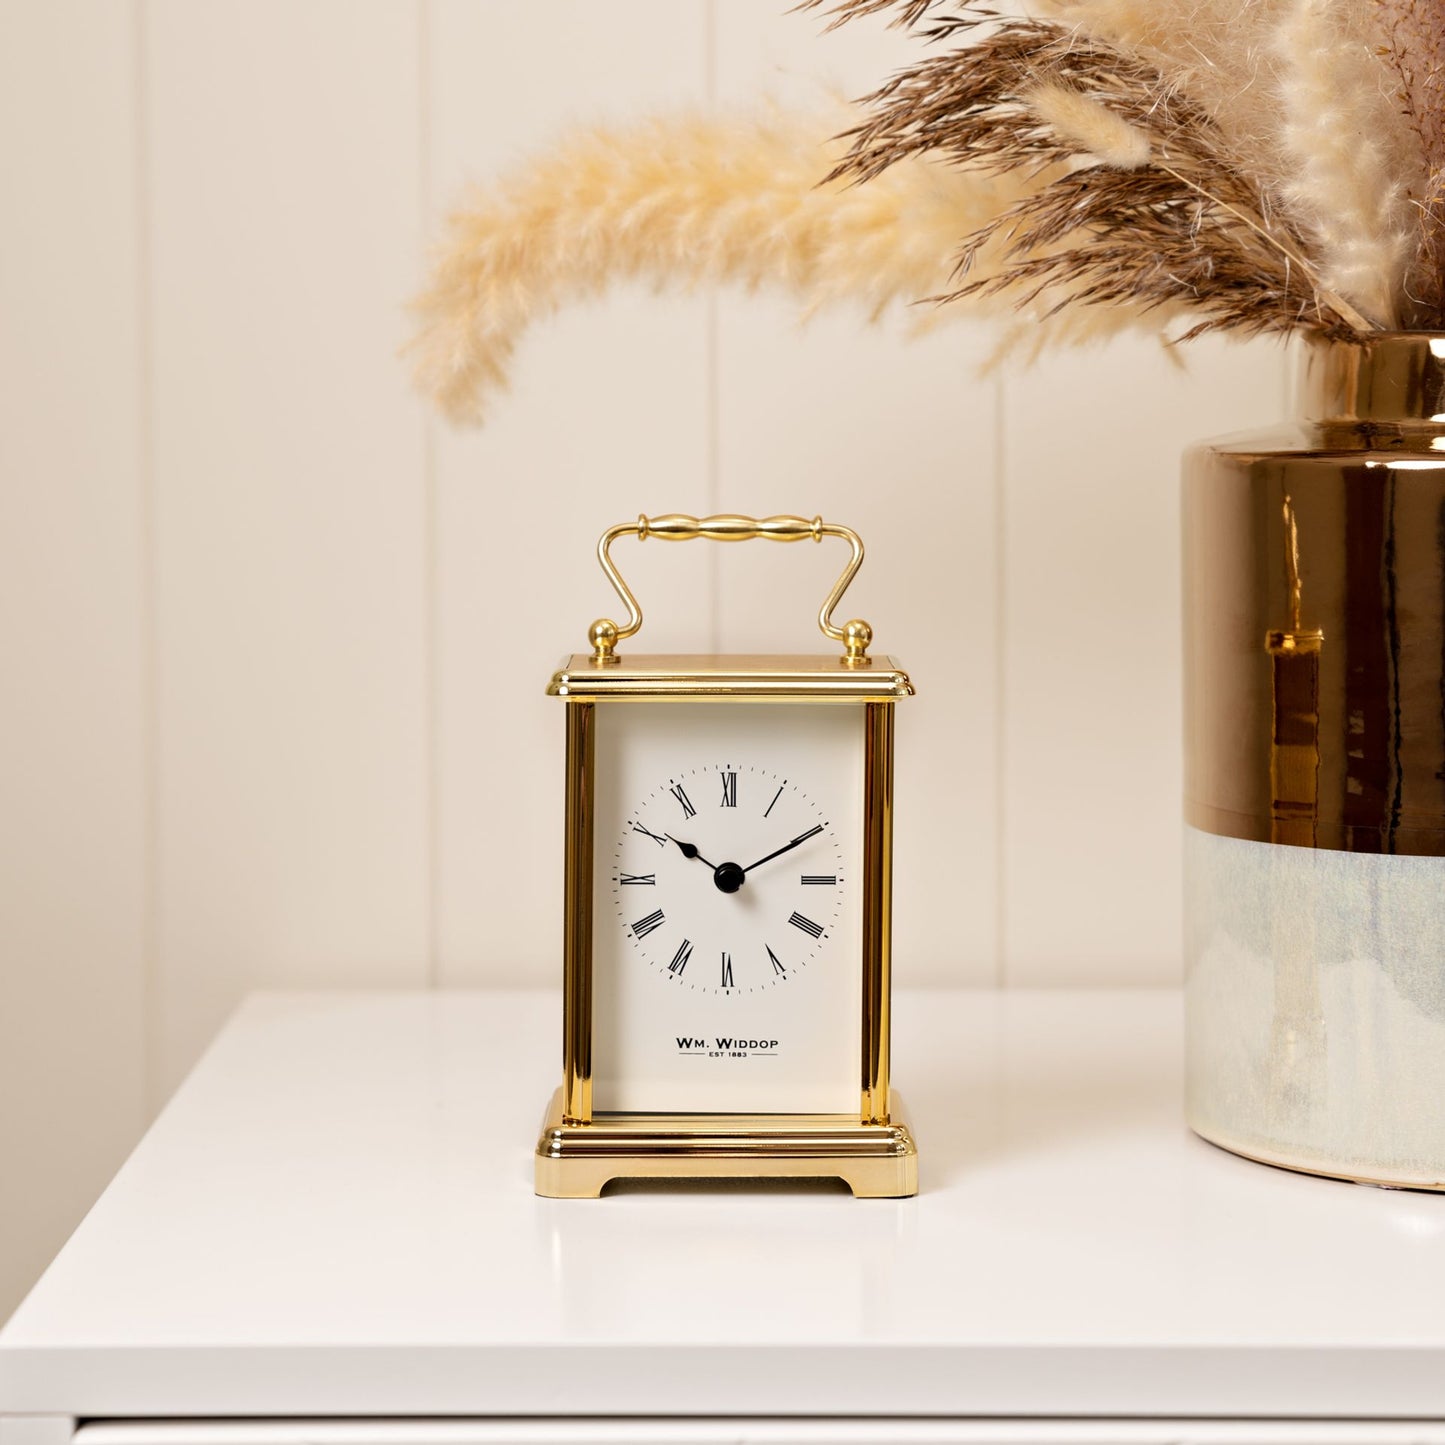 William Widdop Brass Effect Carriage Clock, Gold, 6.8 x 9.3 x 16 cm